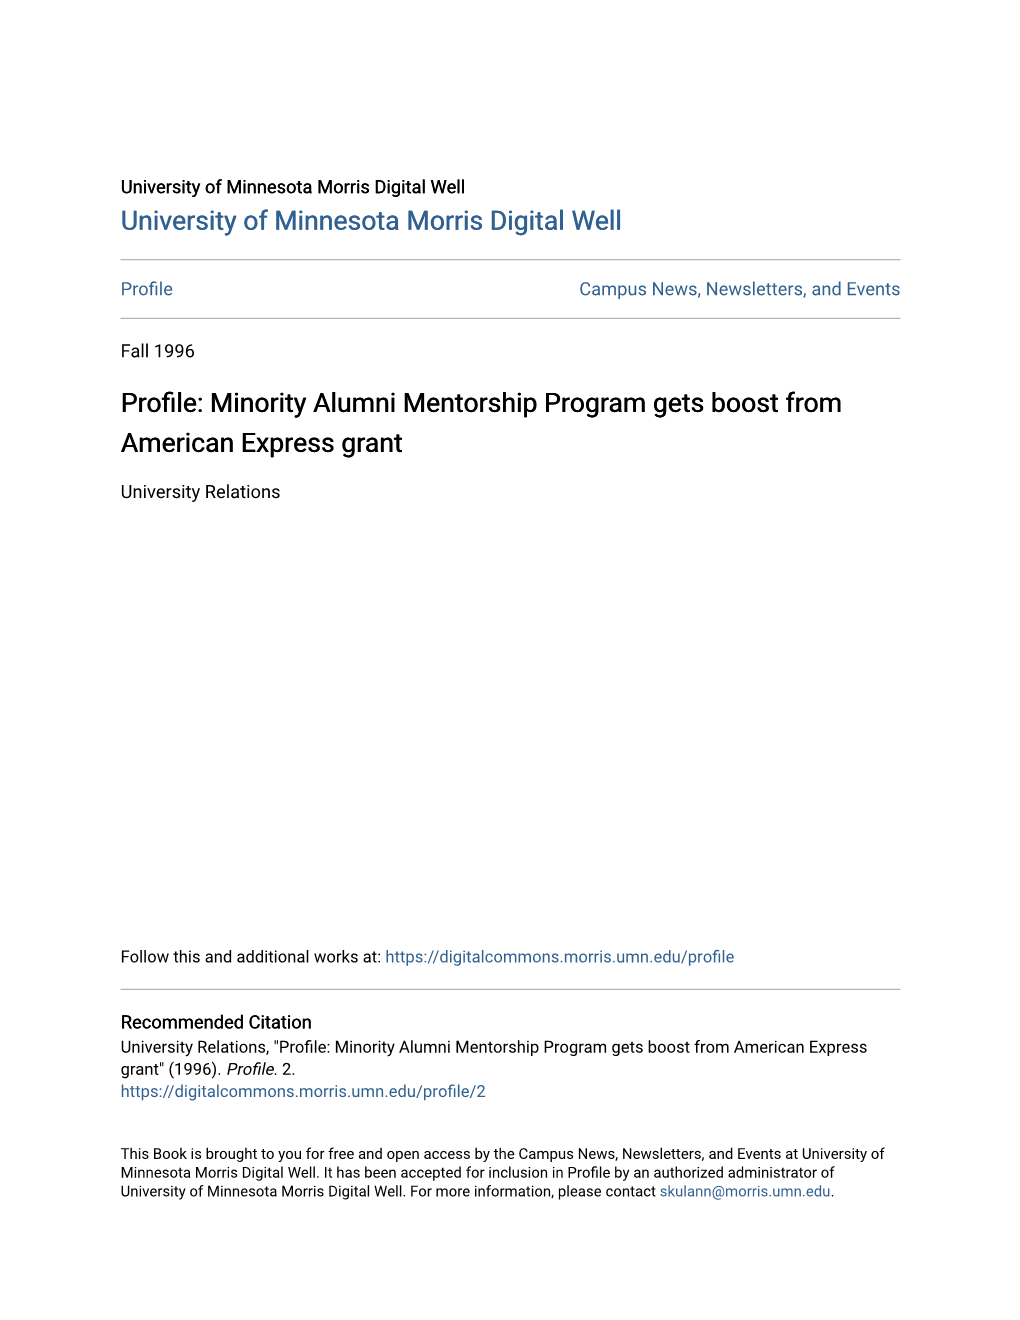 Profile: Minority Alumni Mentorship Program Gets Boost from American Express Grant